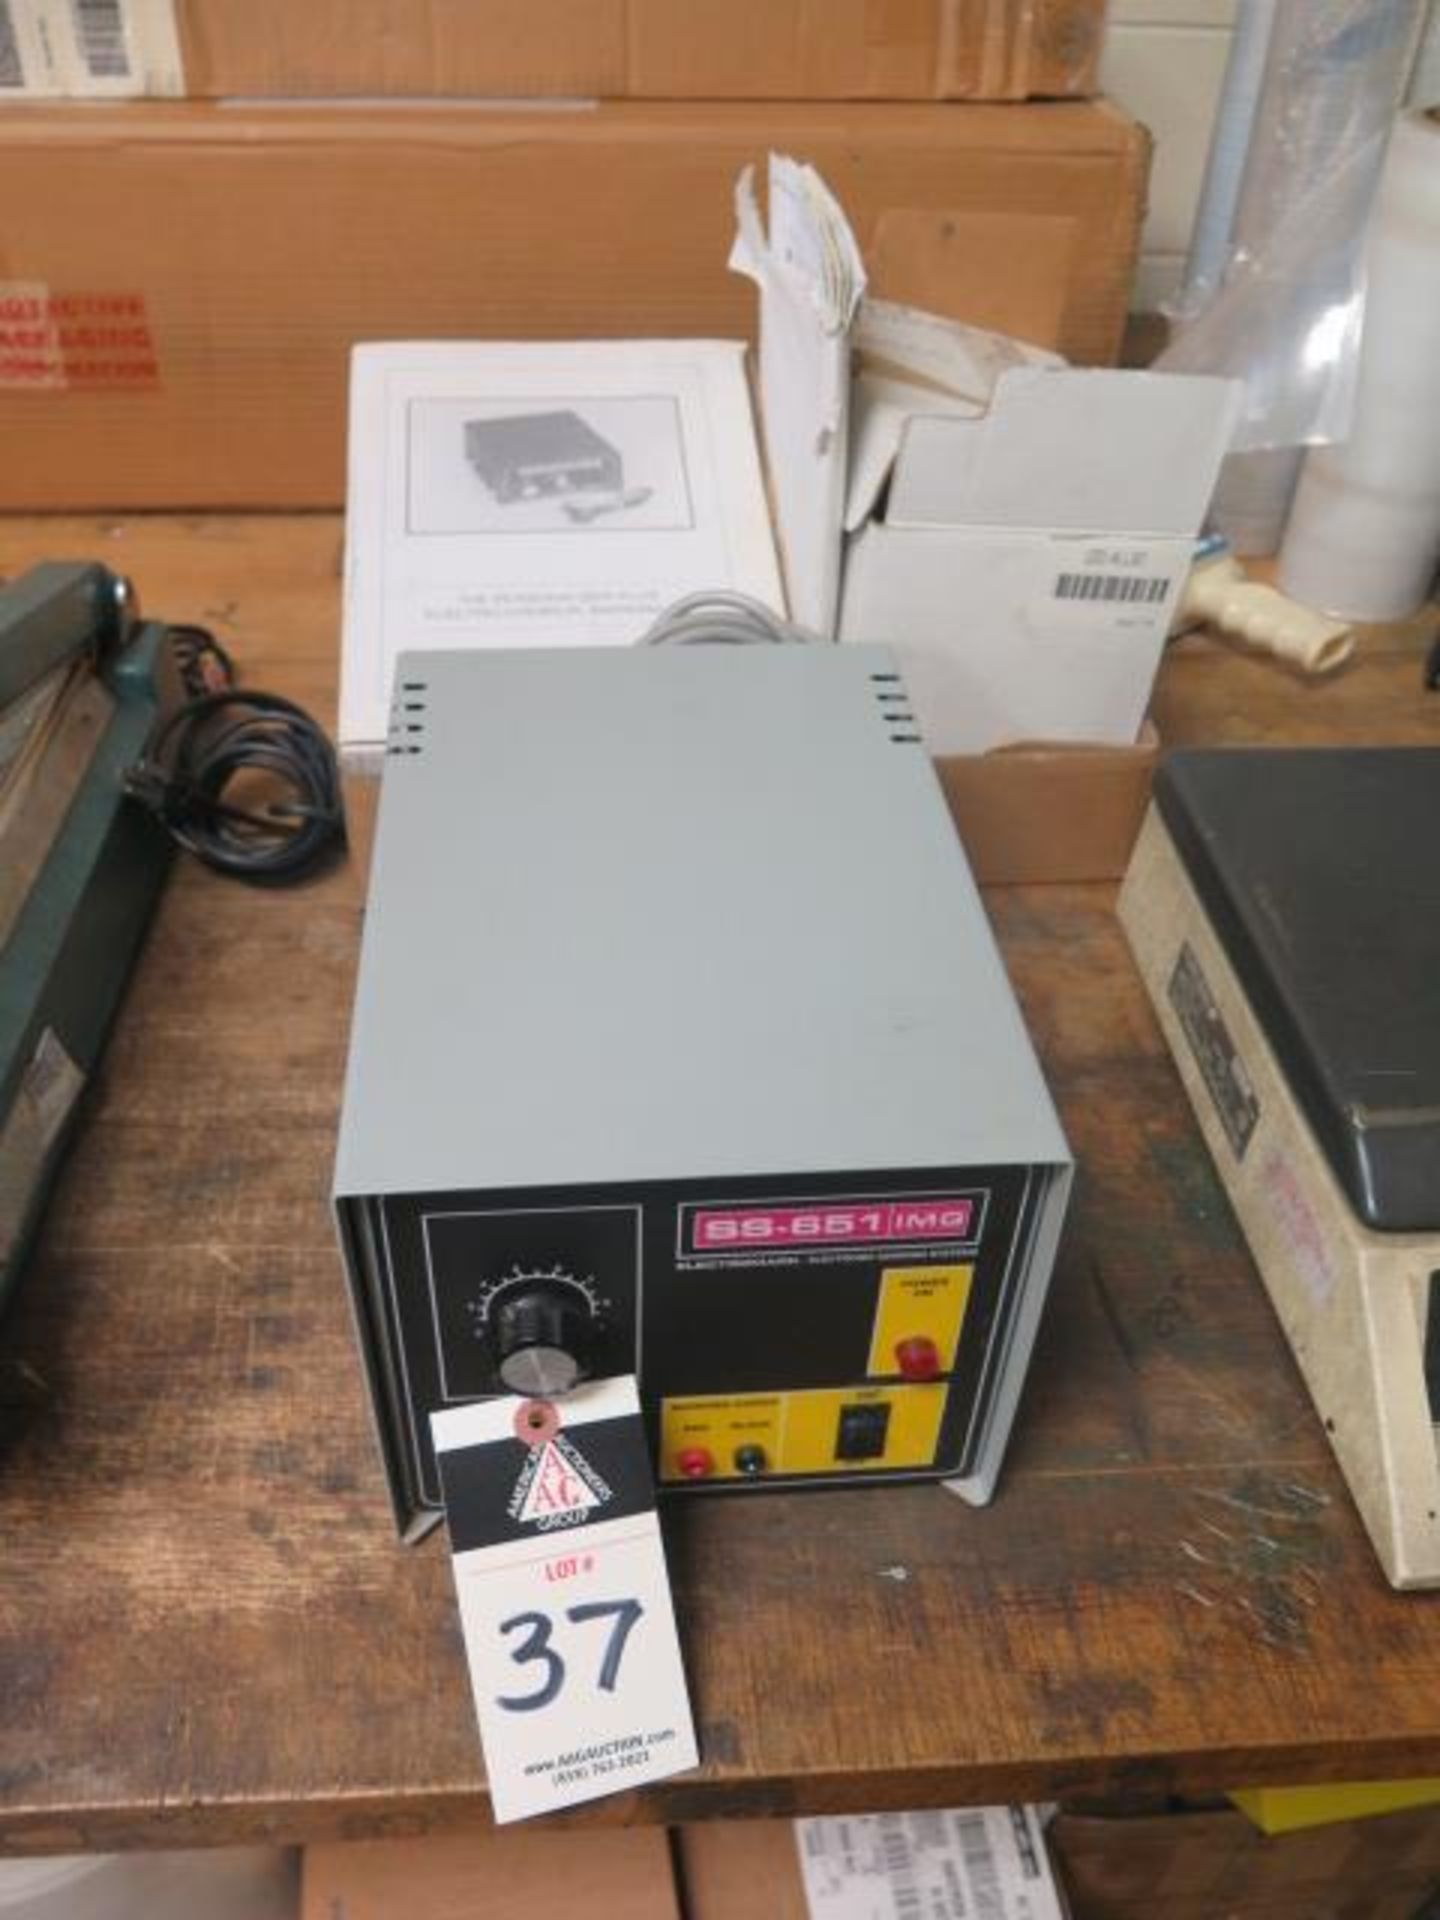 Electromark mdl. SS-651 IMG Electronic Marking System